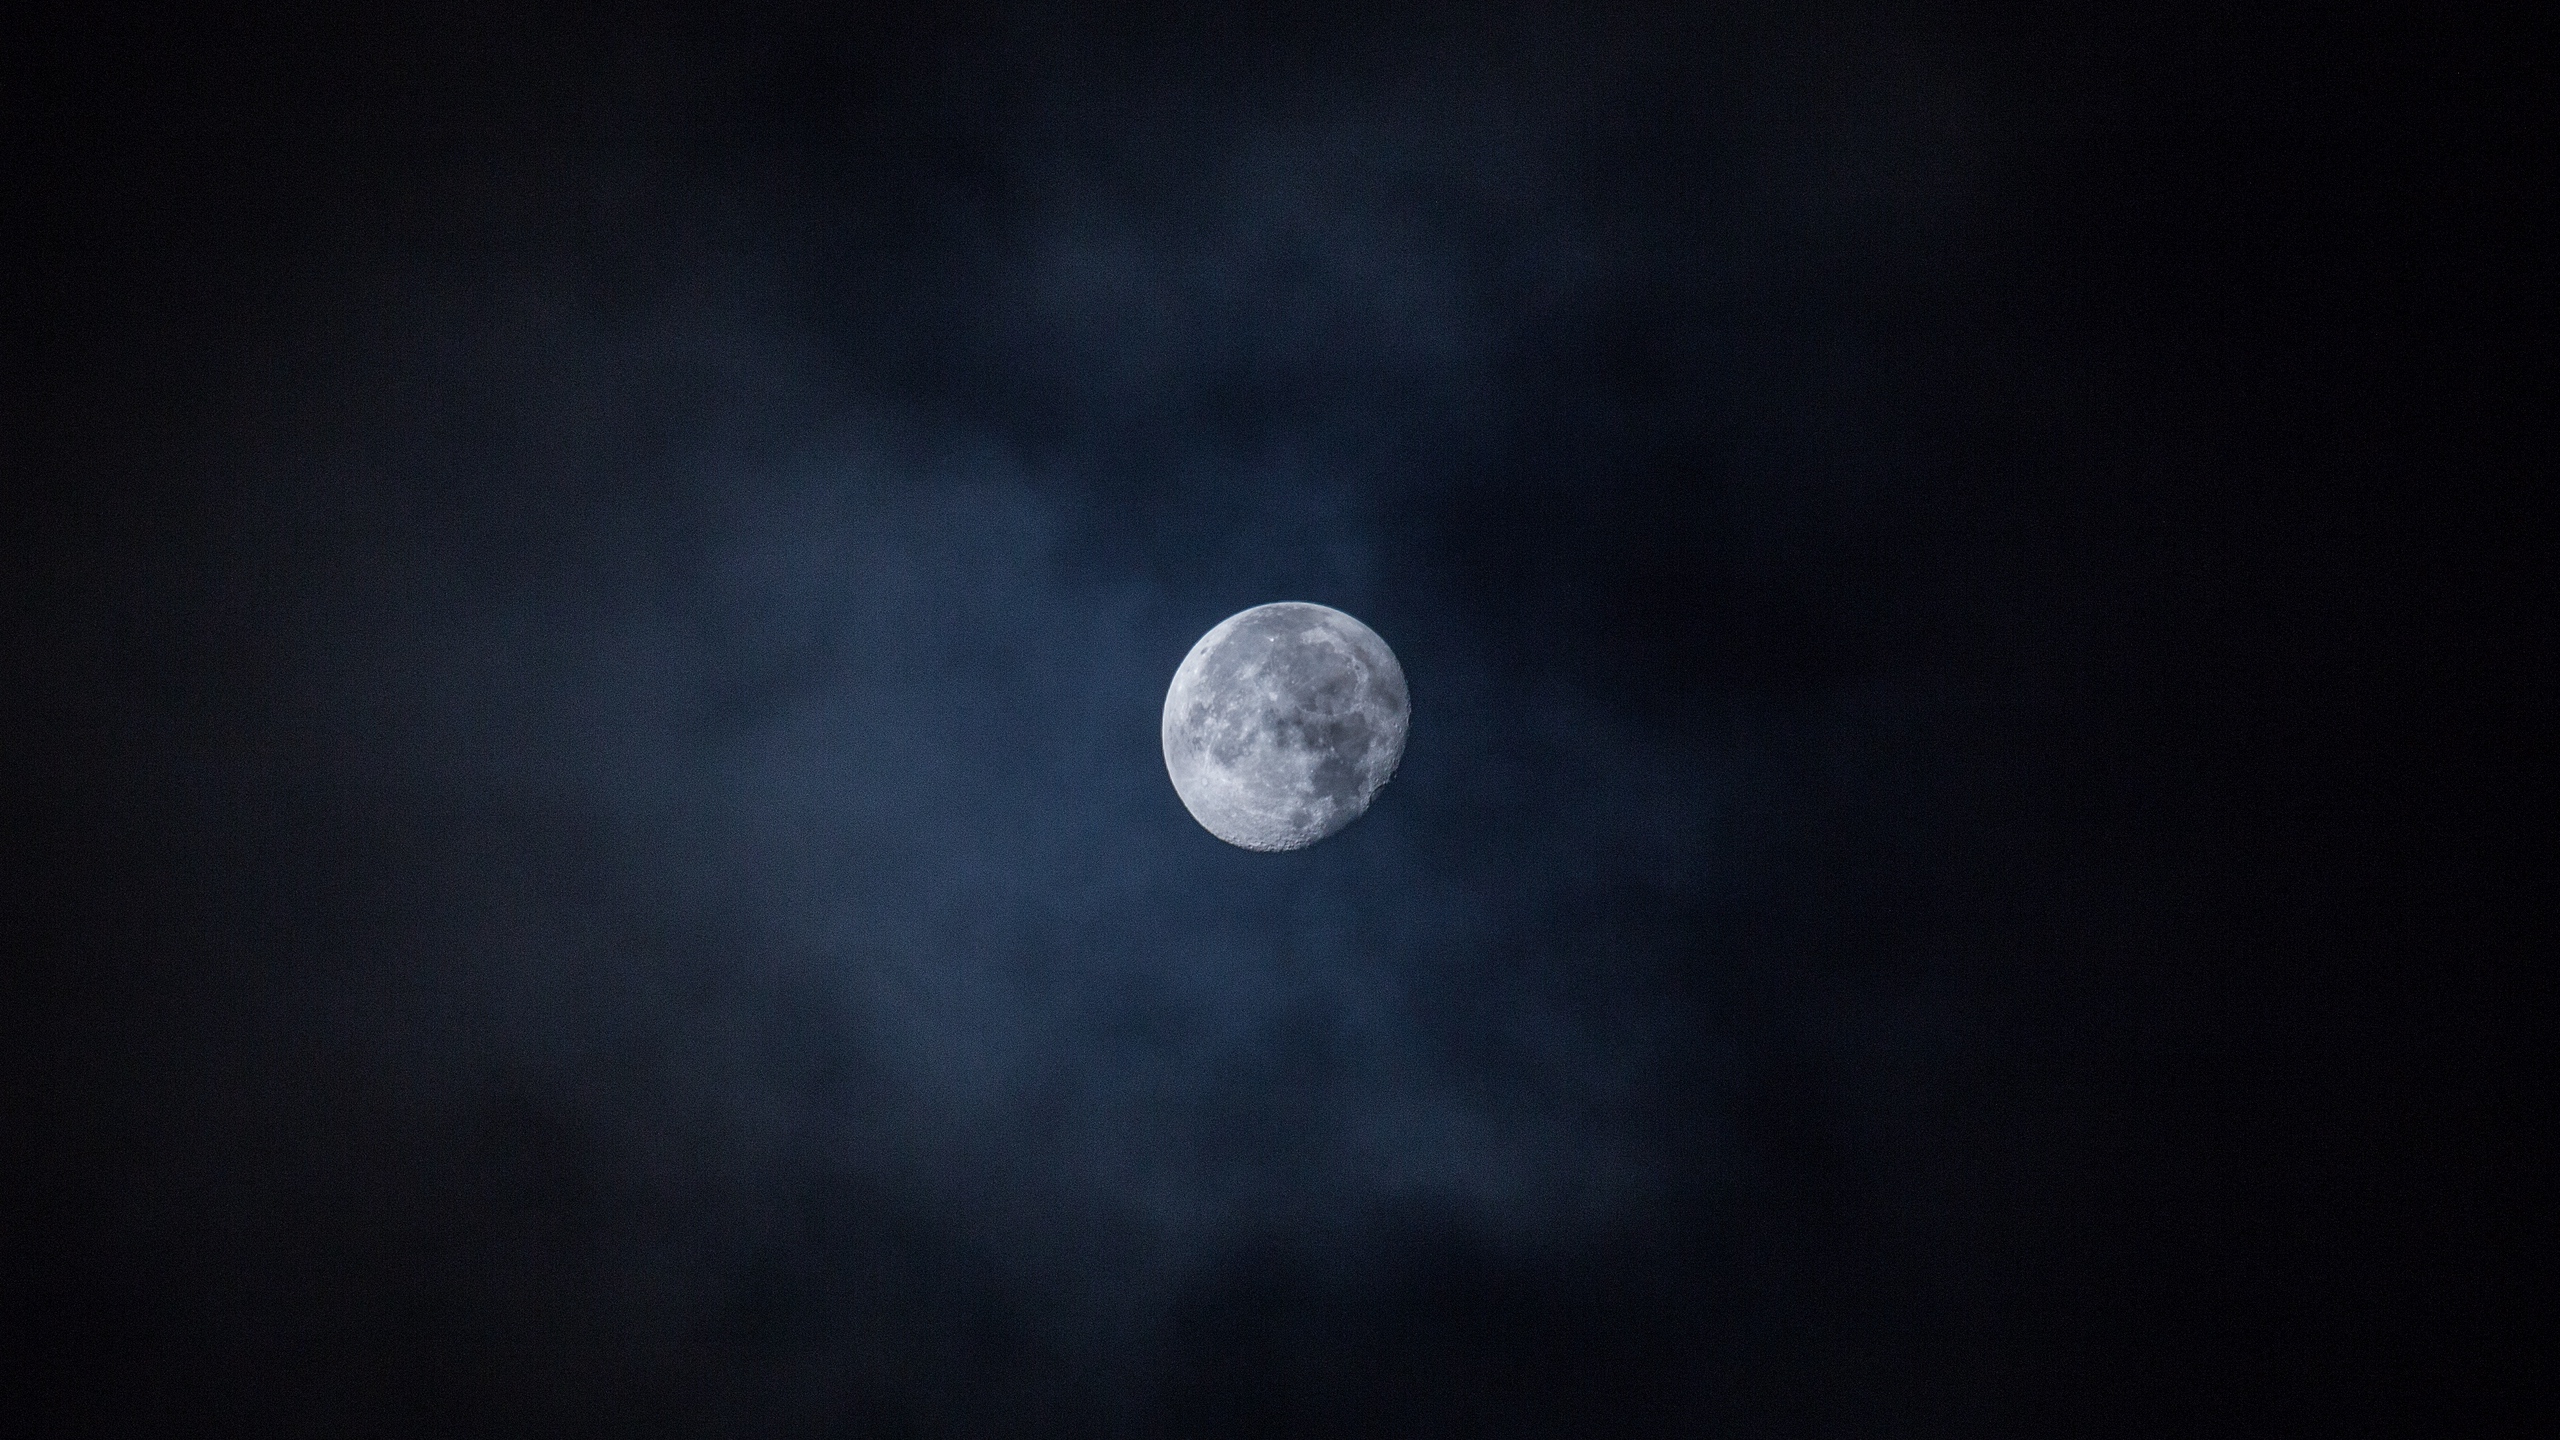 Download wallpaper 2560x1440 moon, sky, night, space